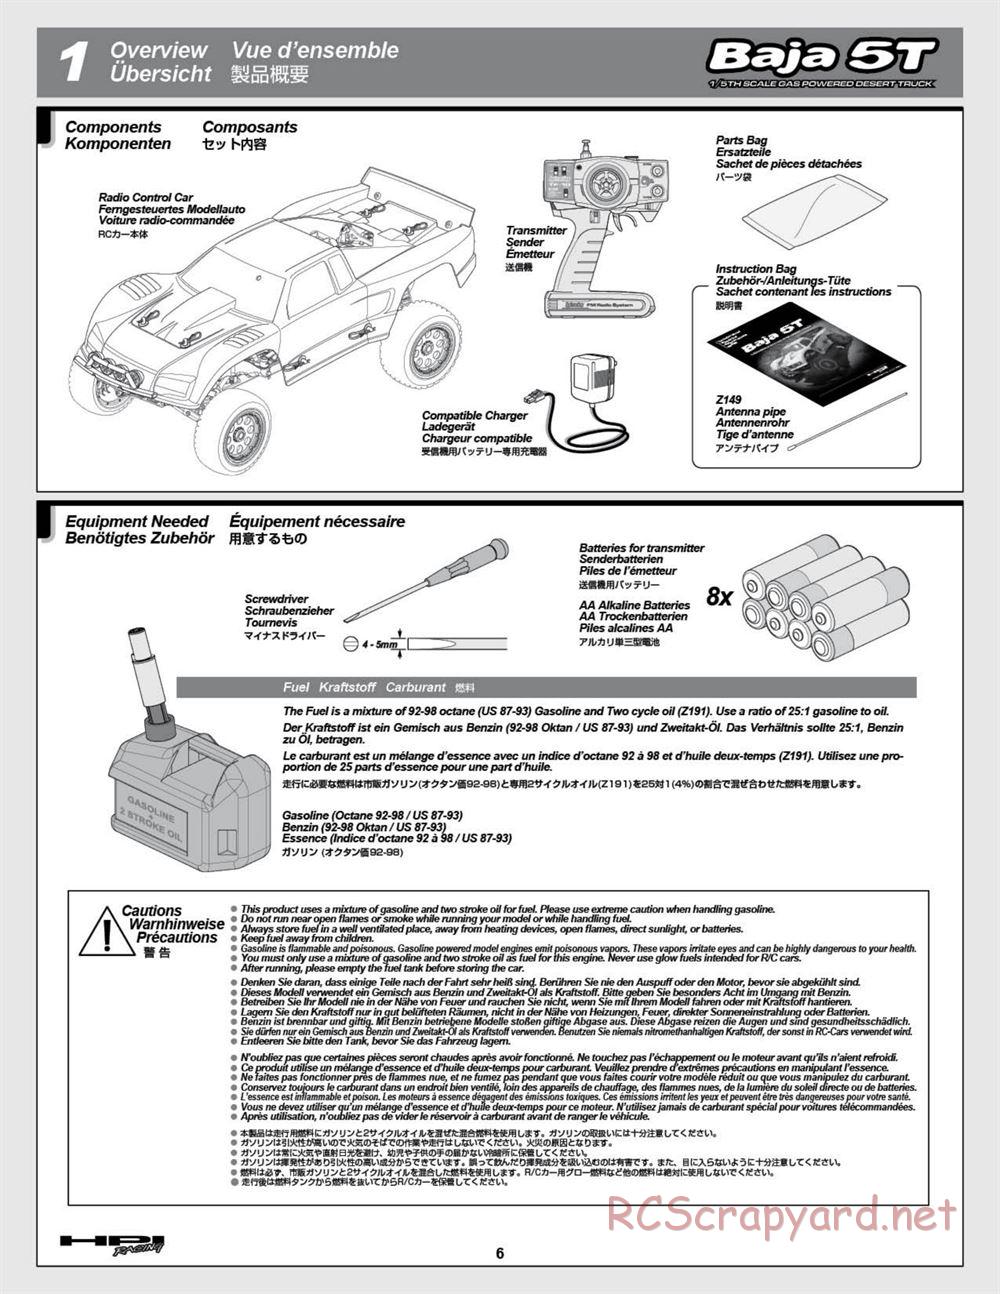 HPI - Baja 5T (2008) - Manual - Page 6